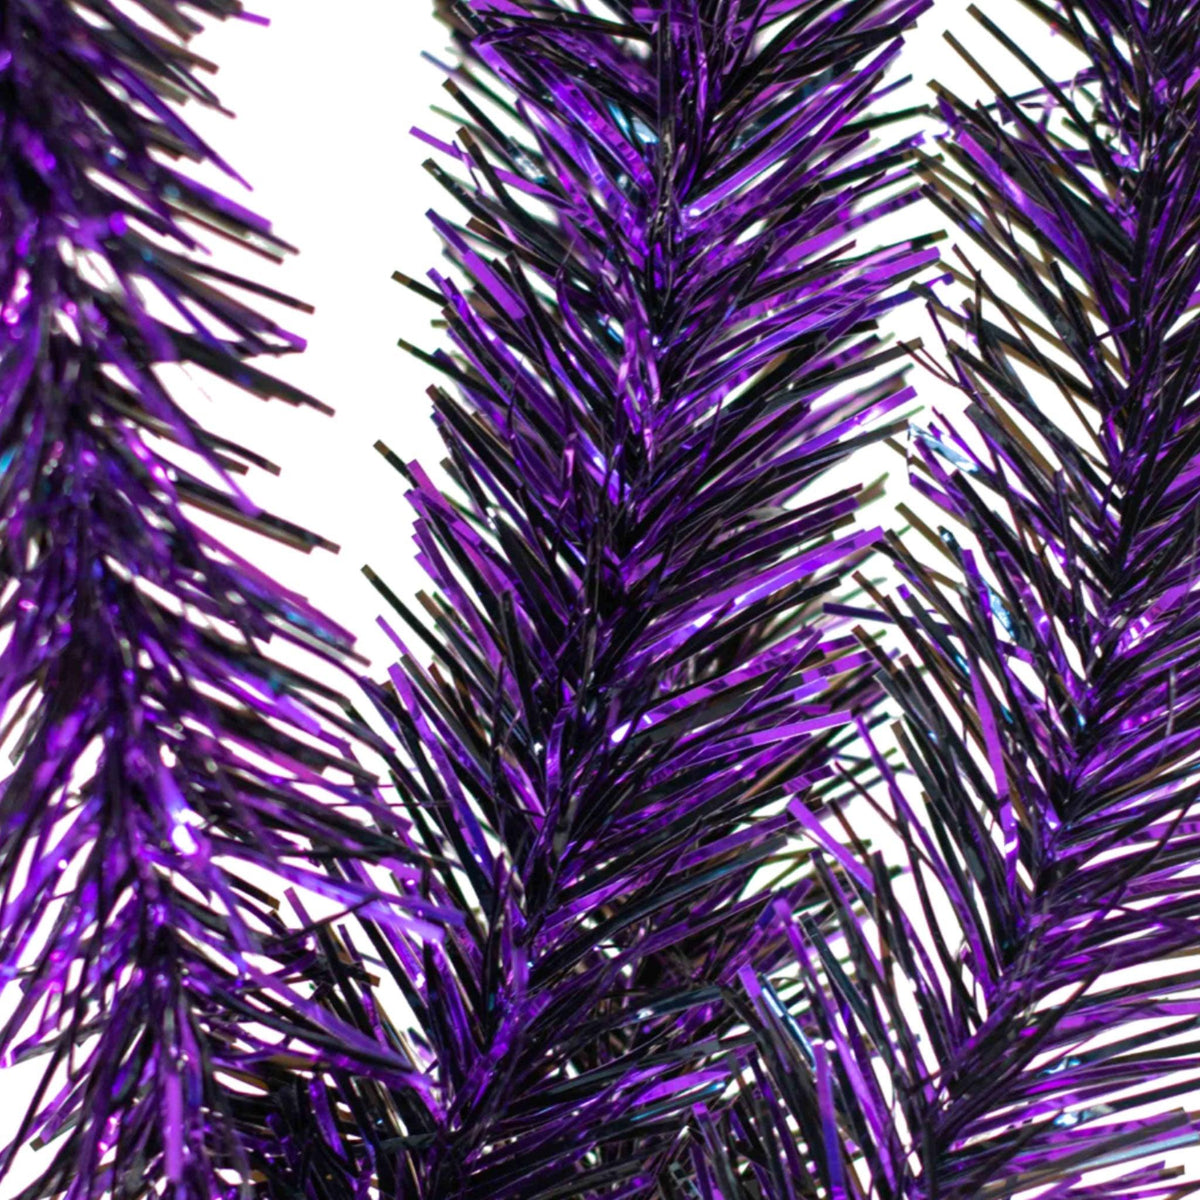 Lee Display's brand new 25FT Metallic Purple and Black Tinsel Garlands and Fringe Embellishments on sale at leedisplay.com